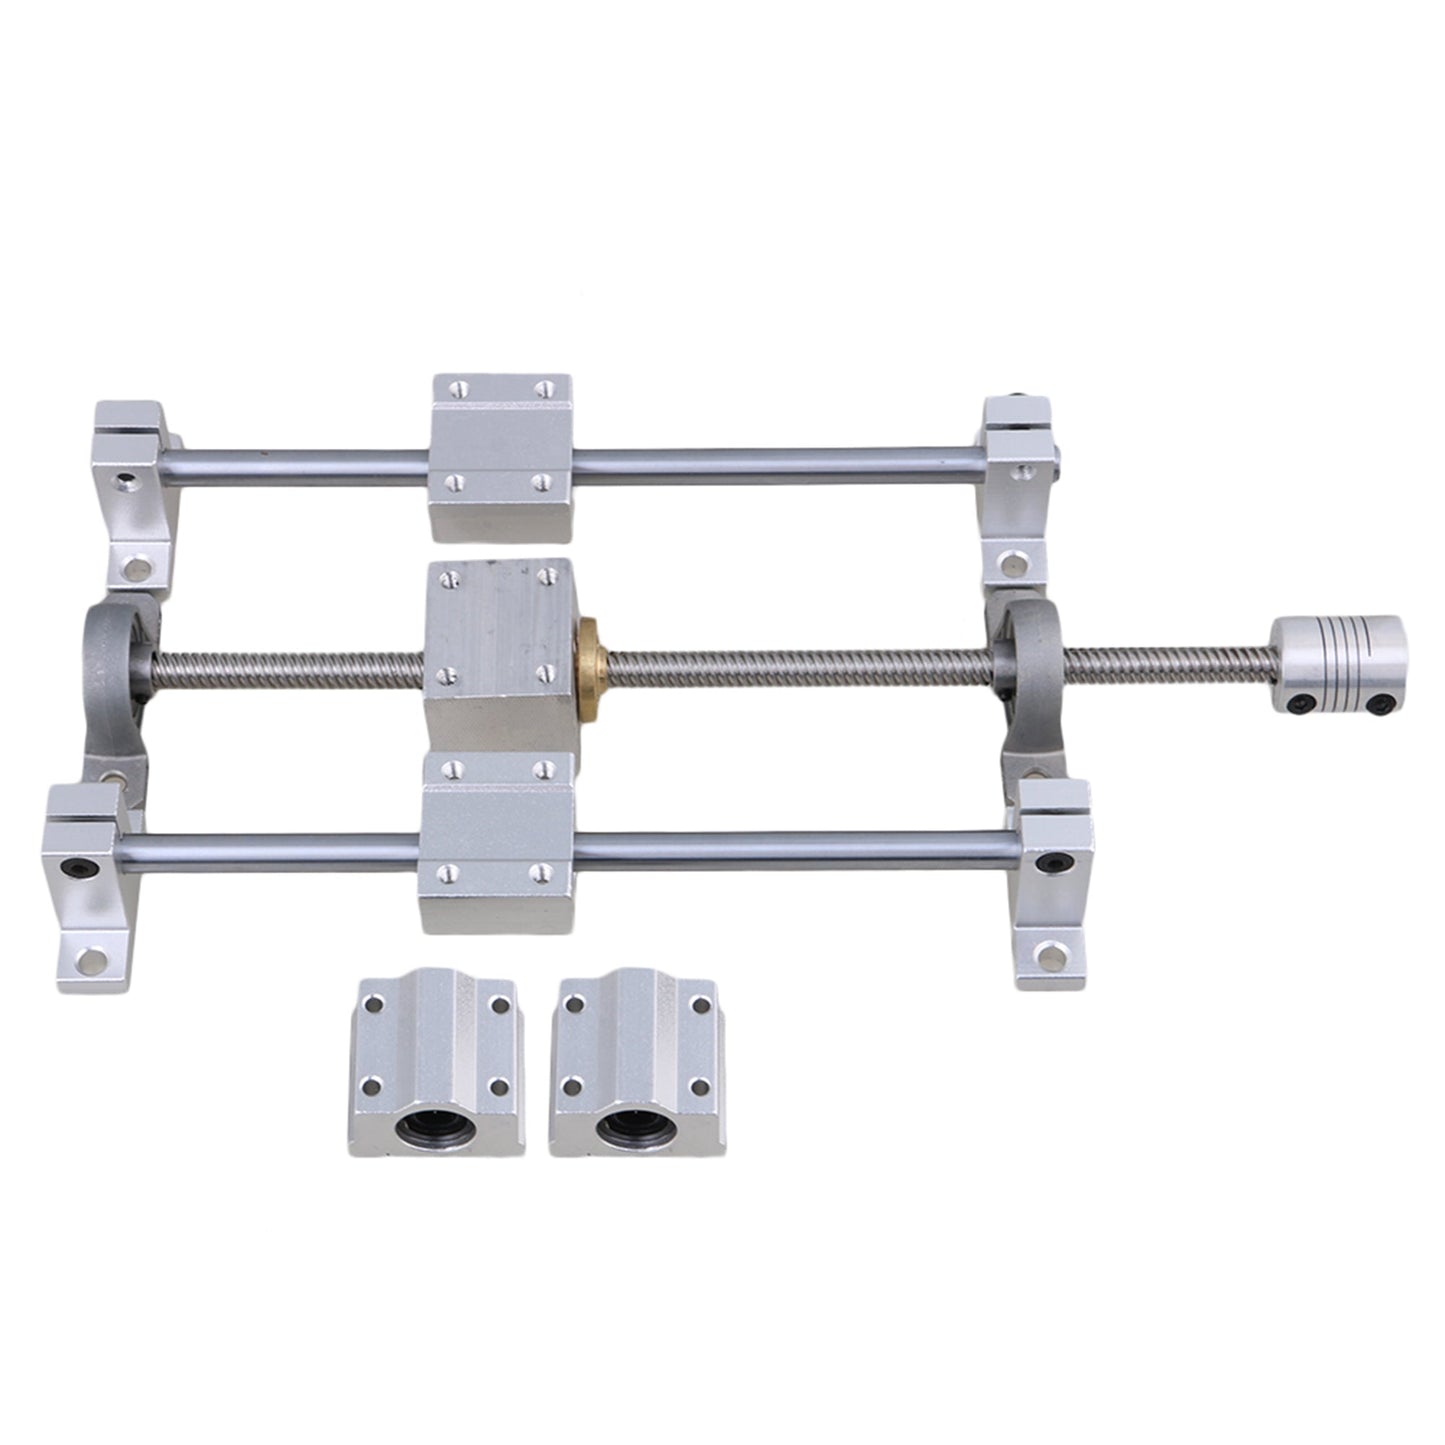 BQLZR Horizontal Dual Rails Lead Screw Kit Optical Axis Lead Screw for 3D Printer